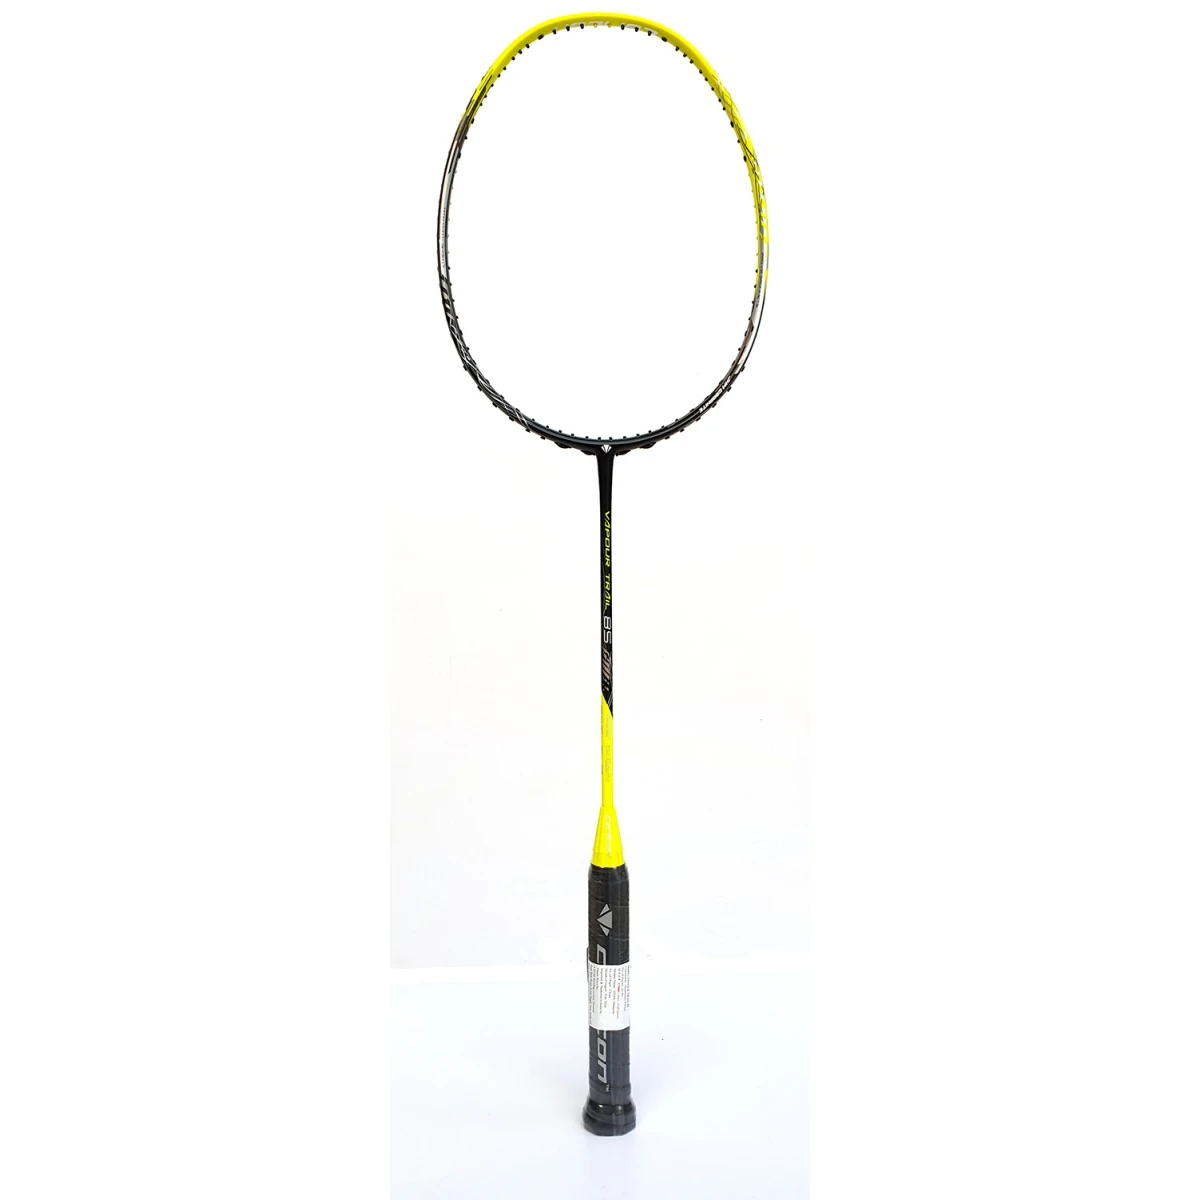 Buy Carlton Vapour Trail 85 Badminton Racket